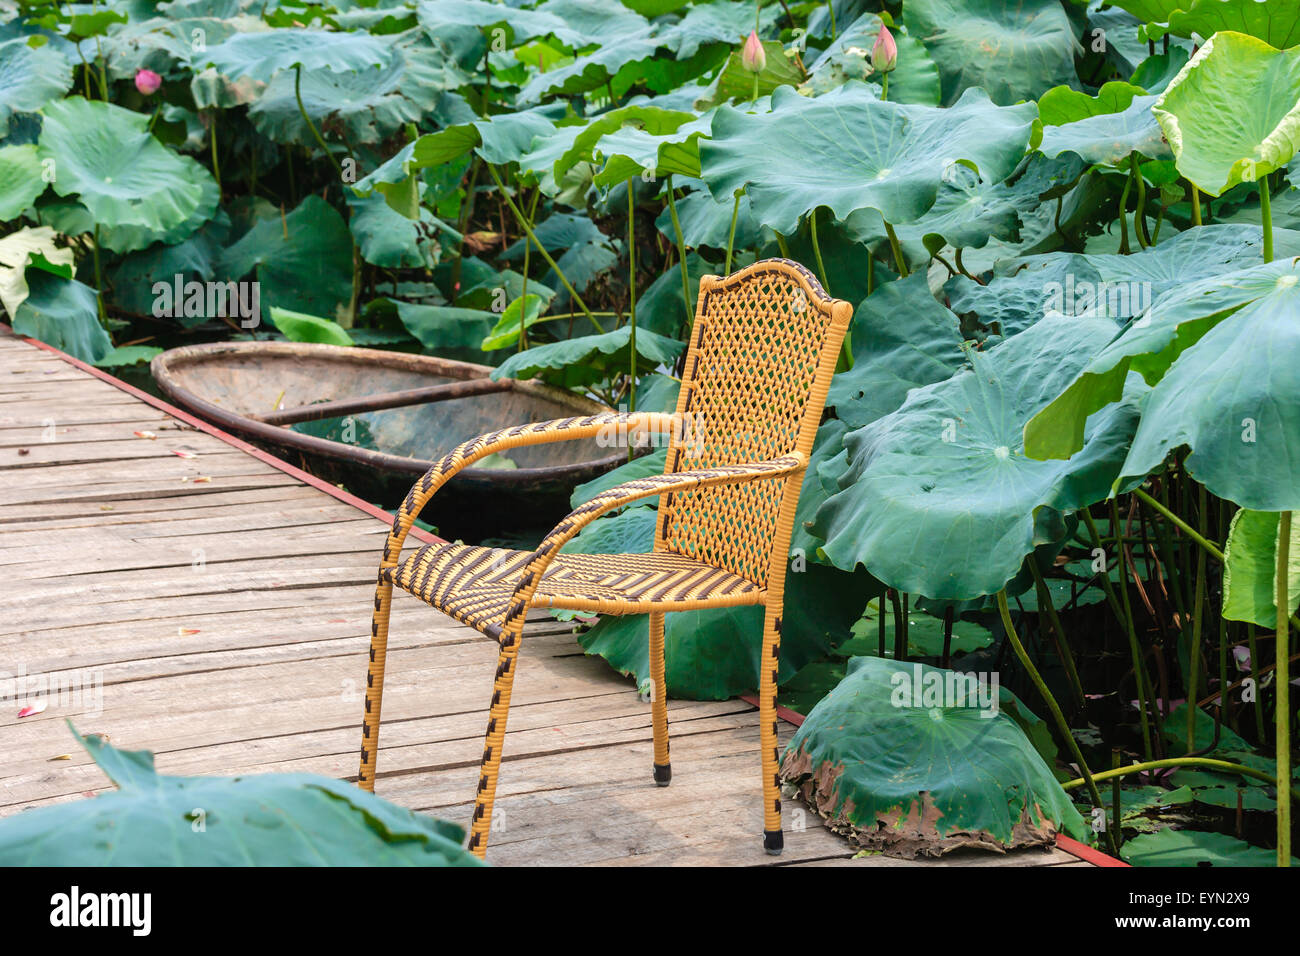 Bar garden near West lake in Hanoi, Vietnam on July 25, 2015 Stock Photo